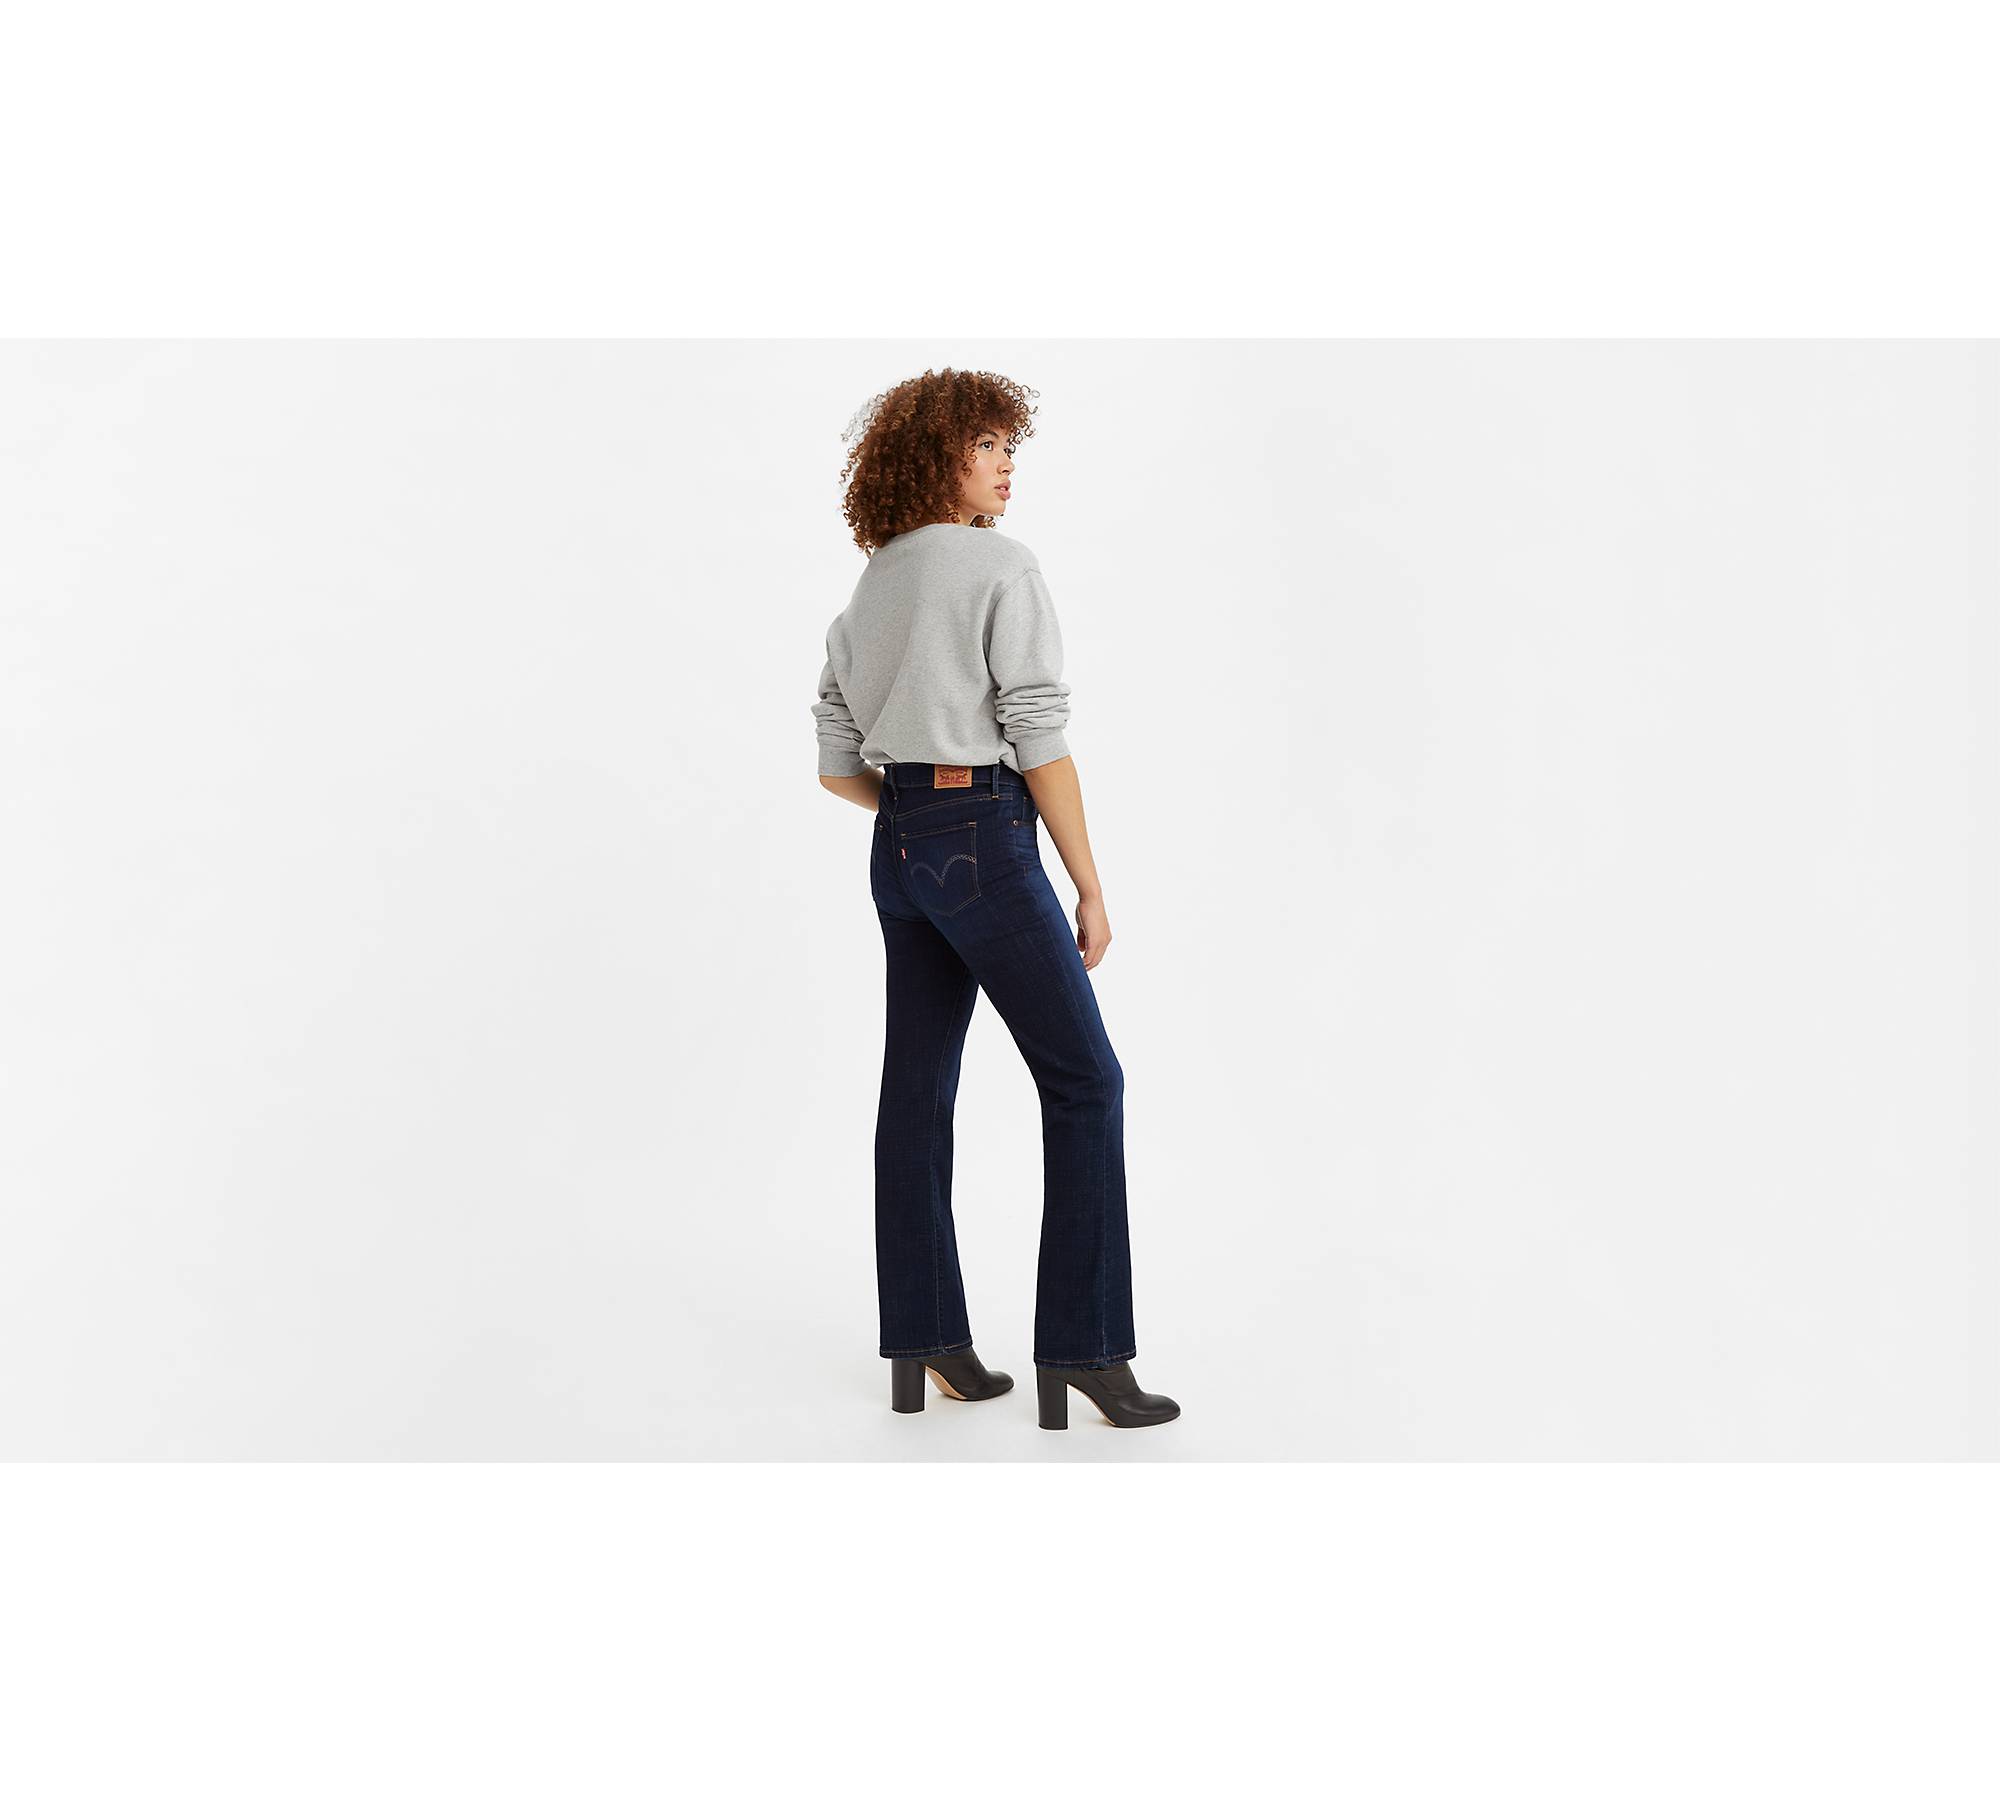 Tall Women's Jeans - Dark Wash Classic Fit Bootcut Tall Women's Jeans –